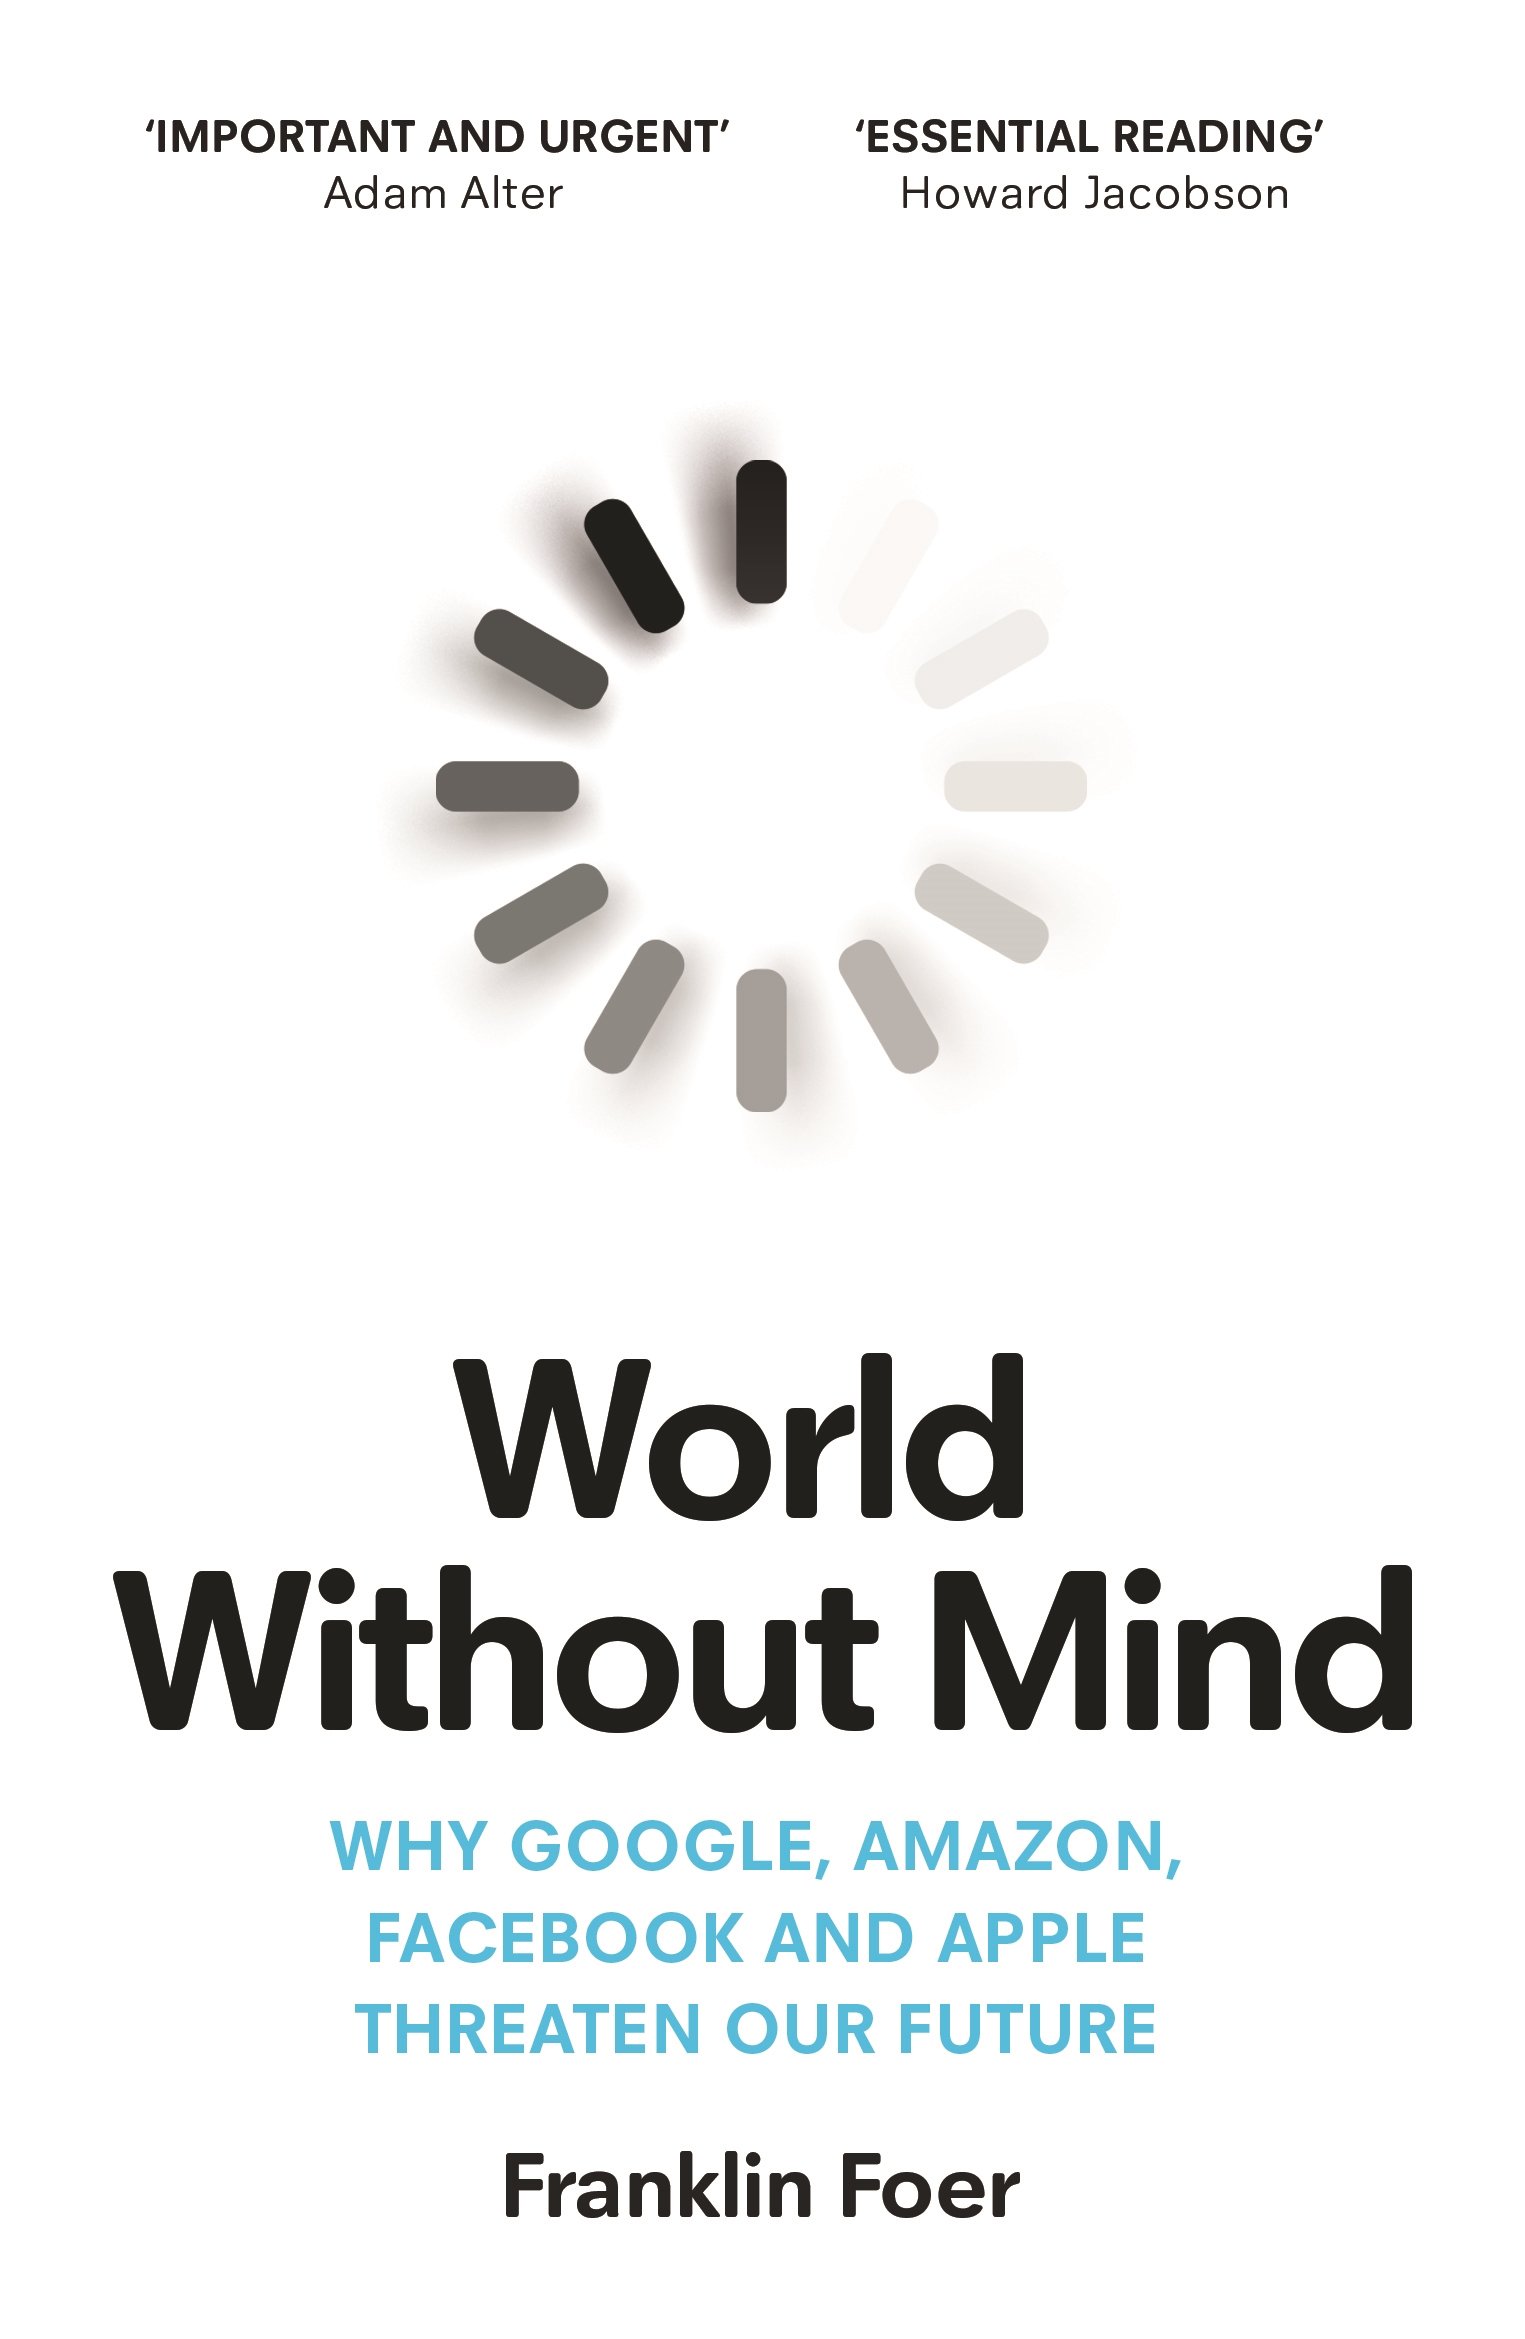 World Without Mind | Franklin Foer image3